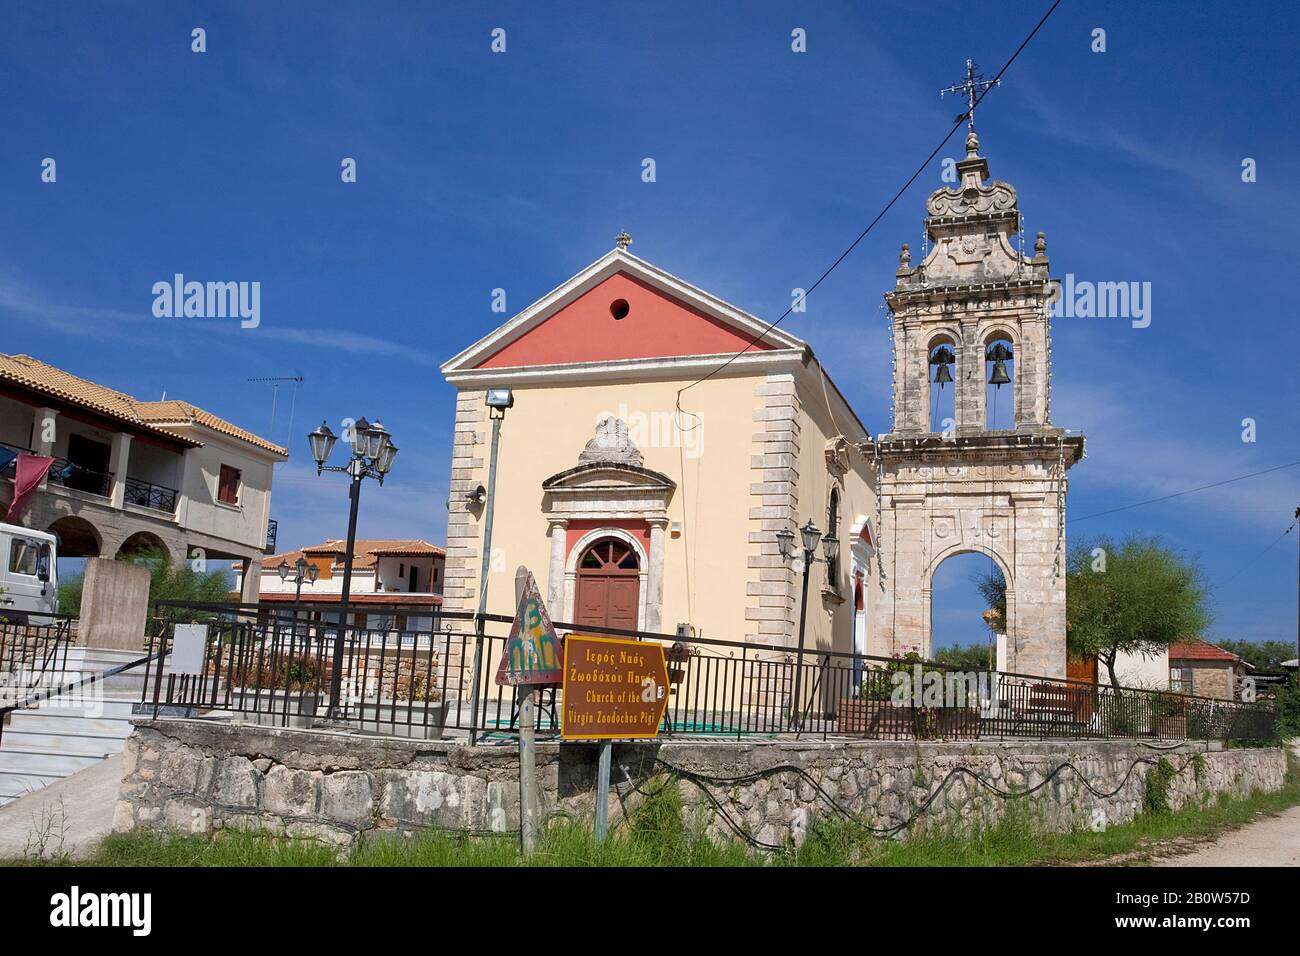 Bell tower and church at village Ipapantis, Zakynthos island, Greece Stock Photo